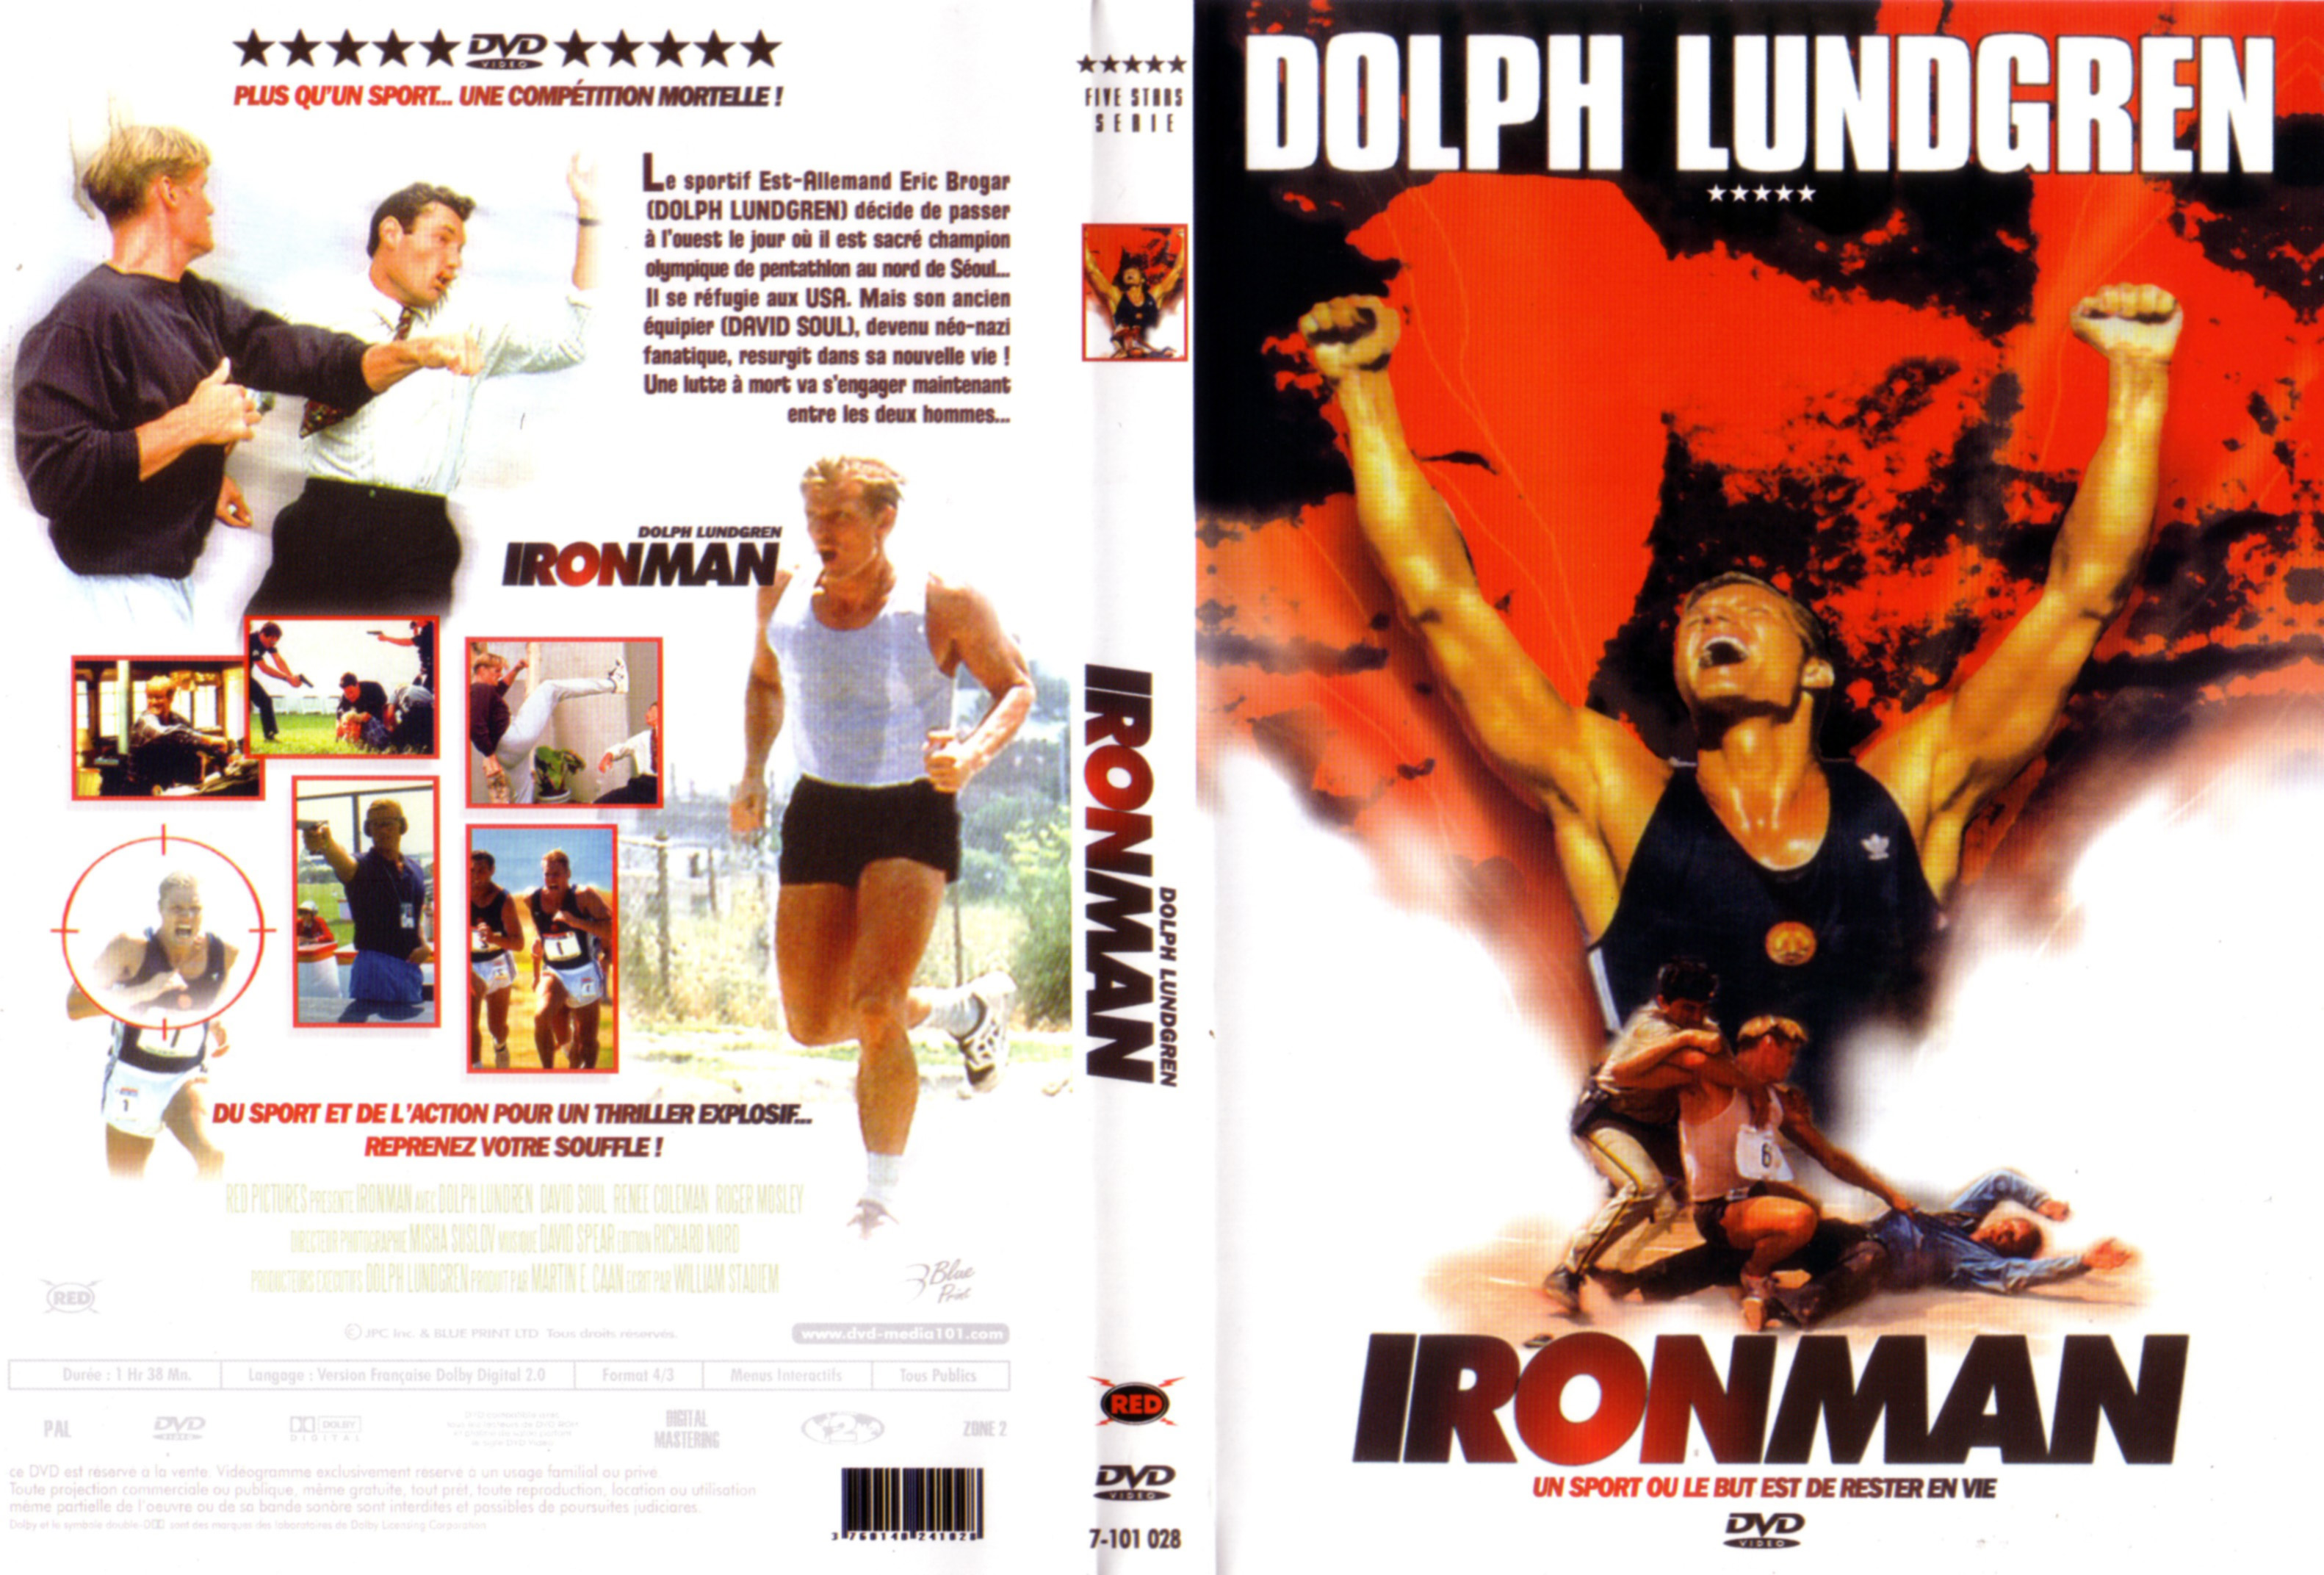 Jaquette DVD Ironman (Dolph Lundgren)